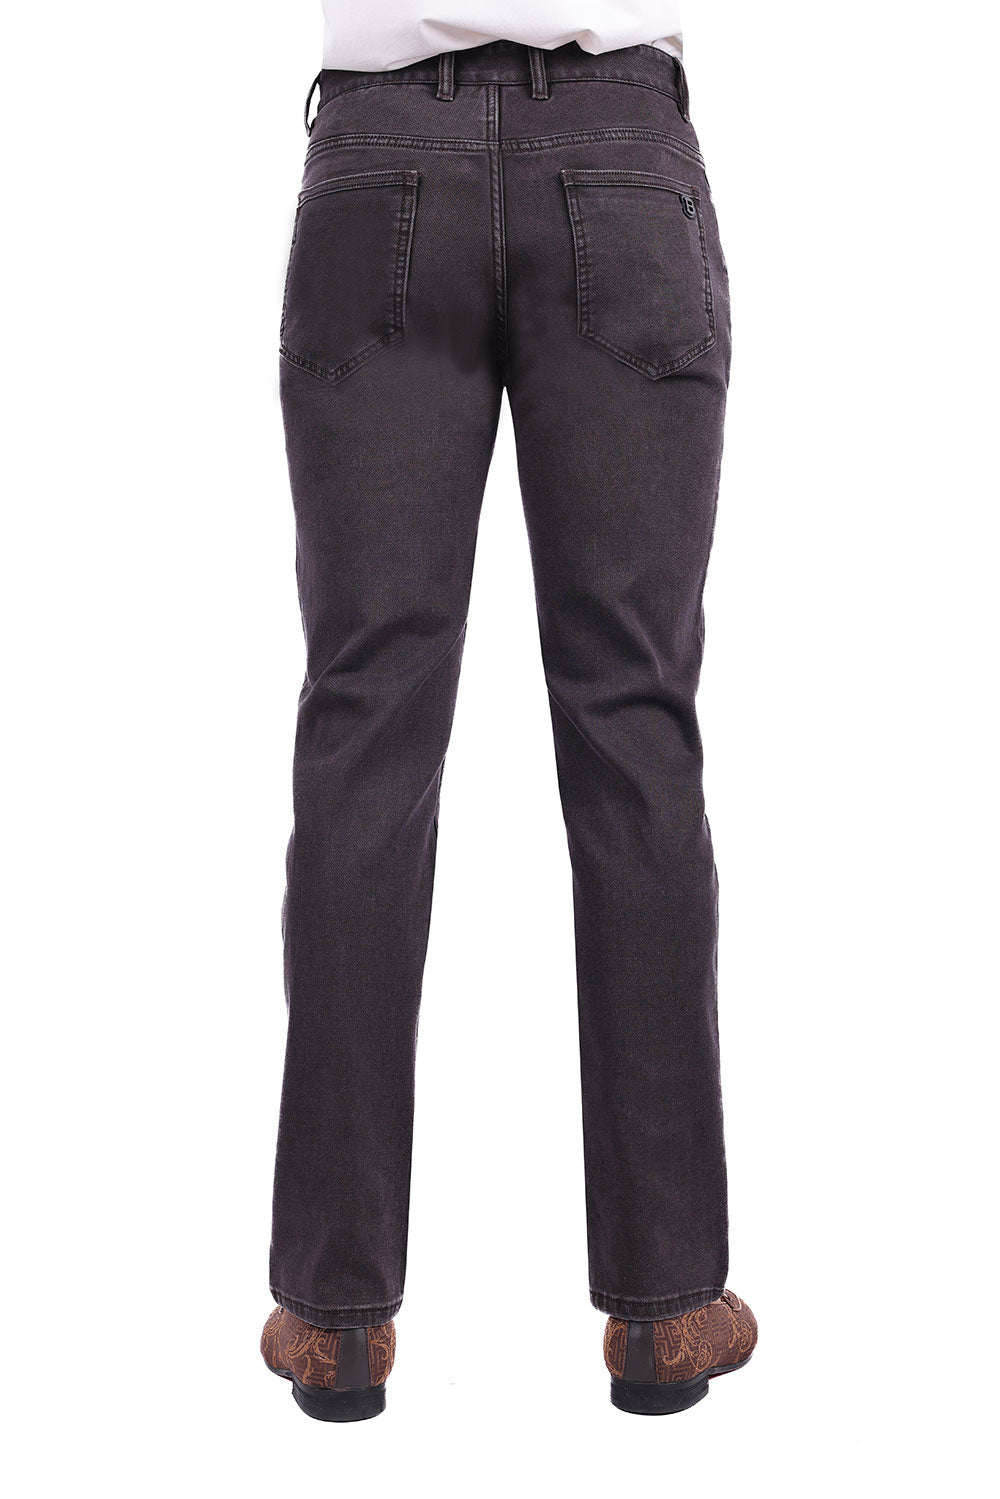 Barabas Men's Solid Color Premium Stretch Denim Jeans 3SN100 Plum